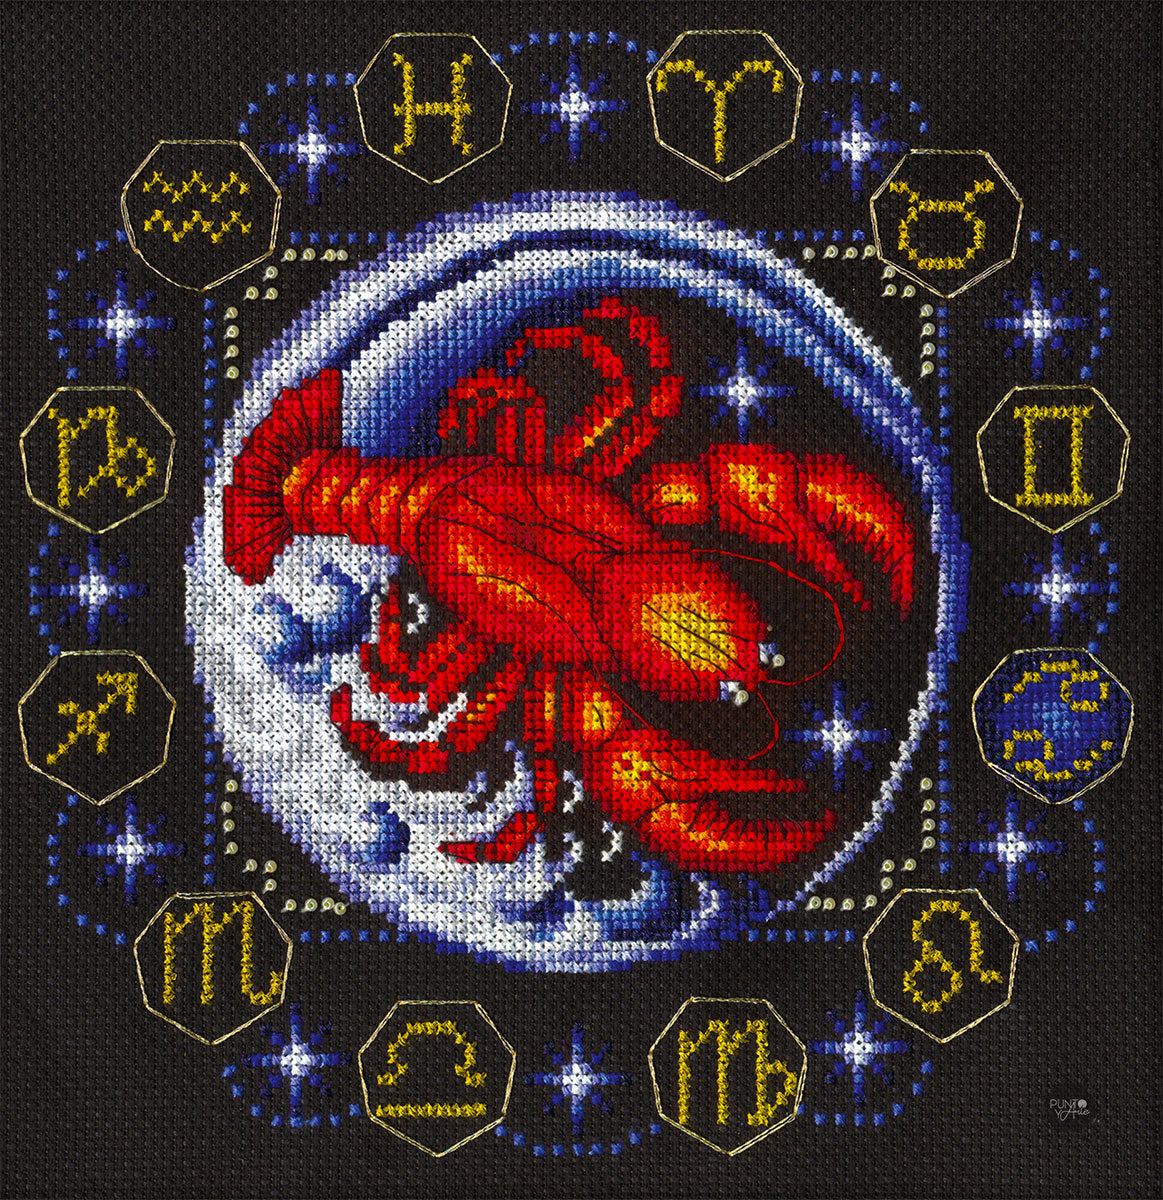 Signs of the zodiac. Cancer - Panna ZN-0925 - Cross stitch kit